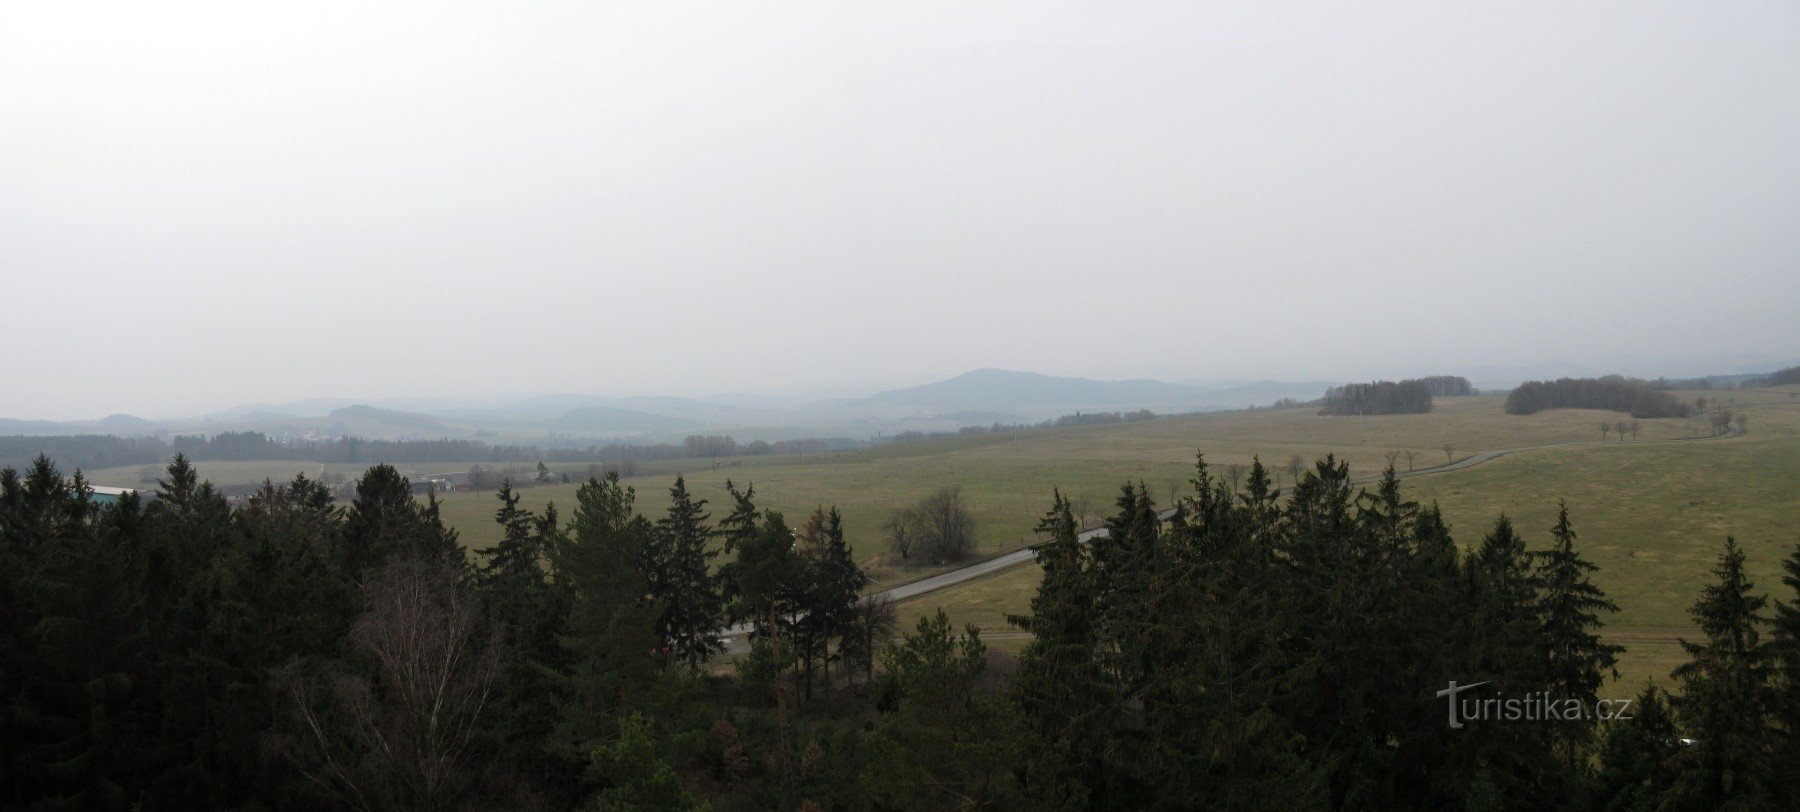 Torre panoramica Na Skále - vista nebbiosa